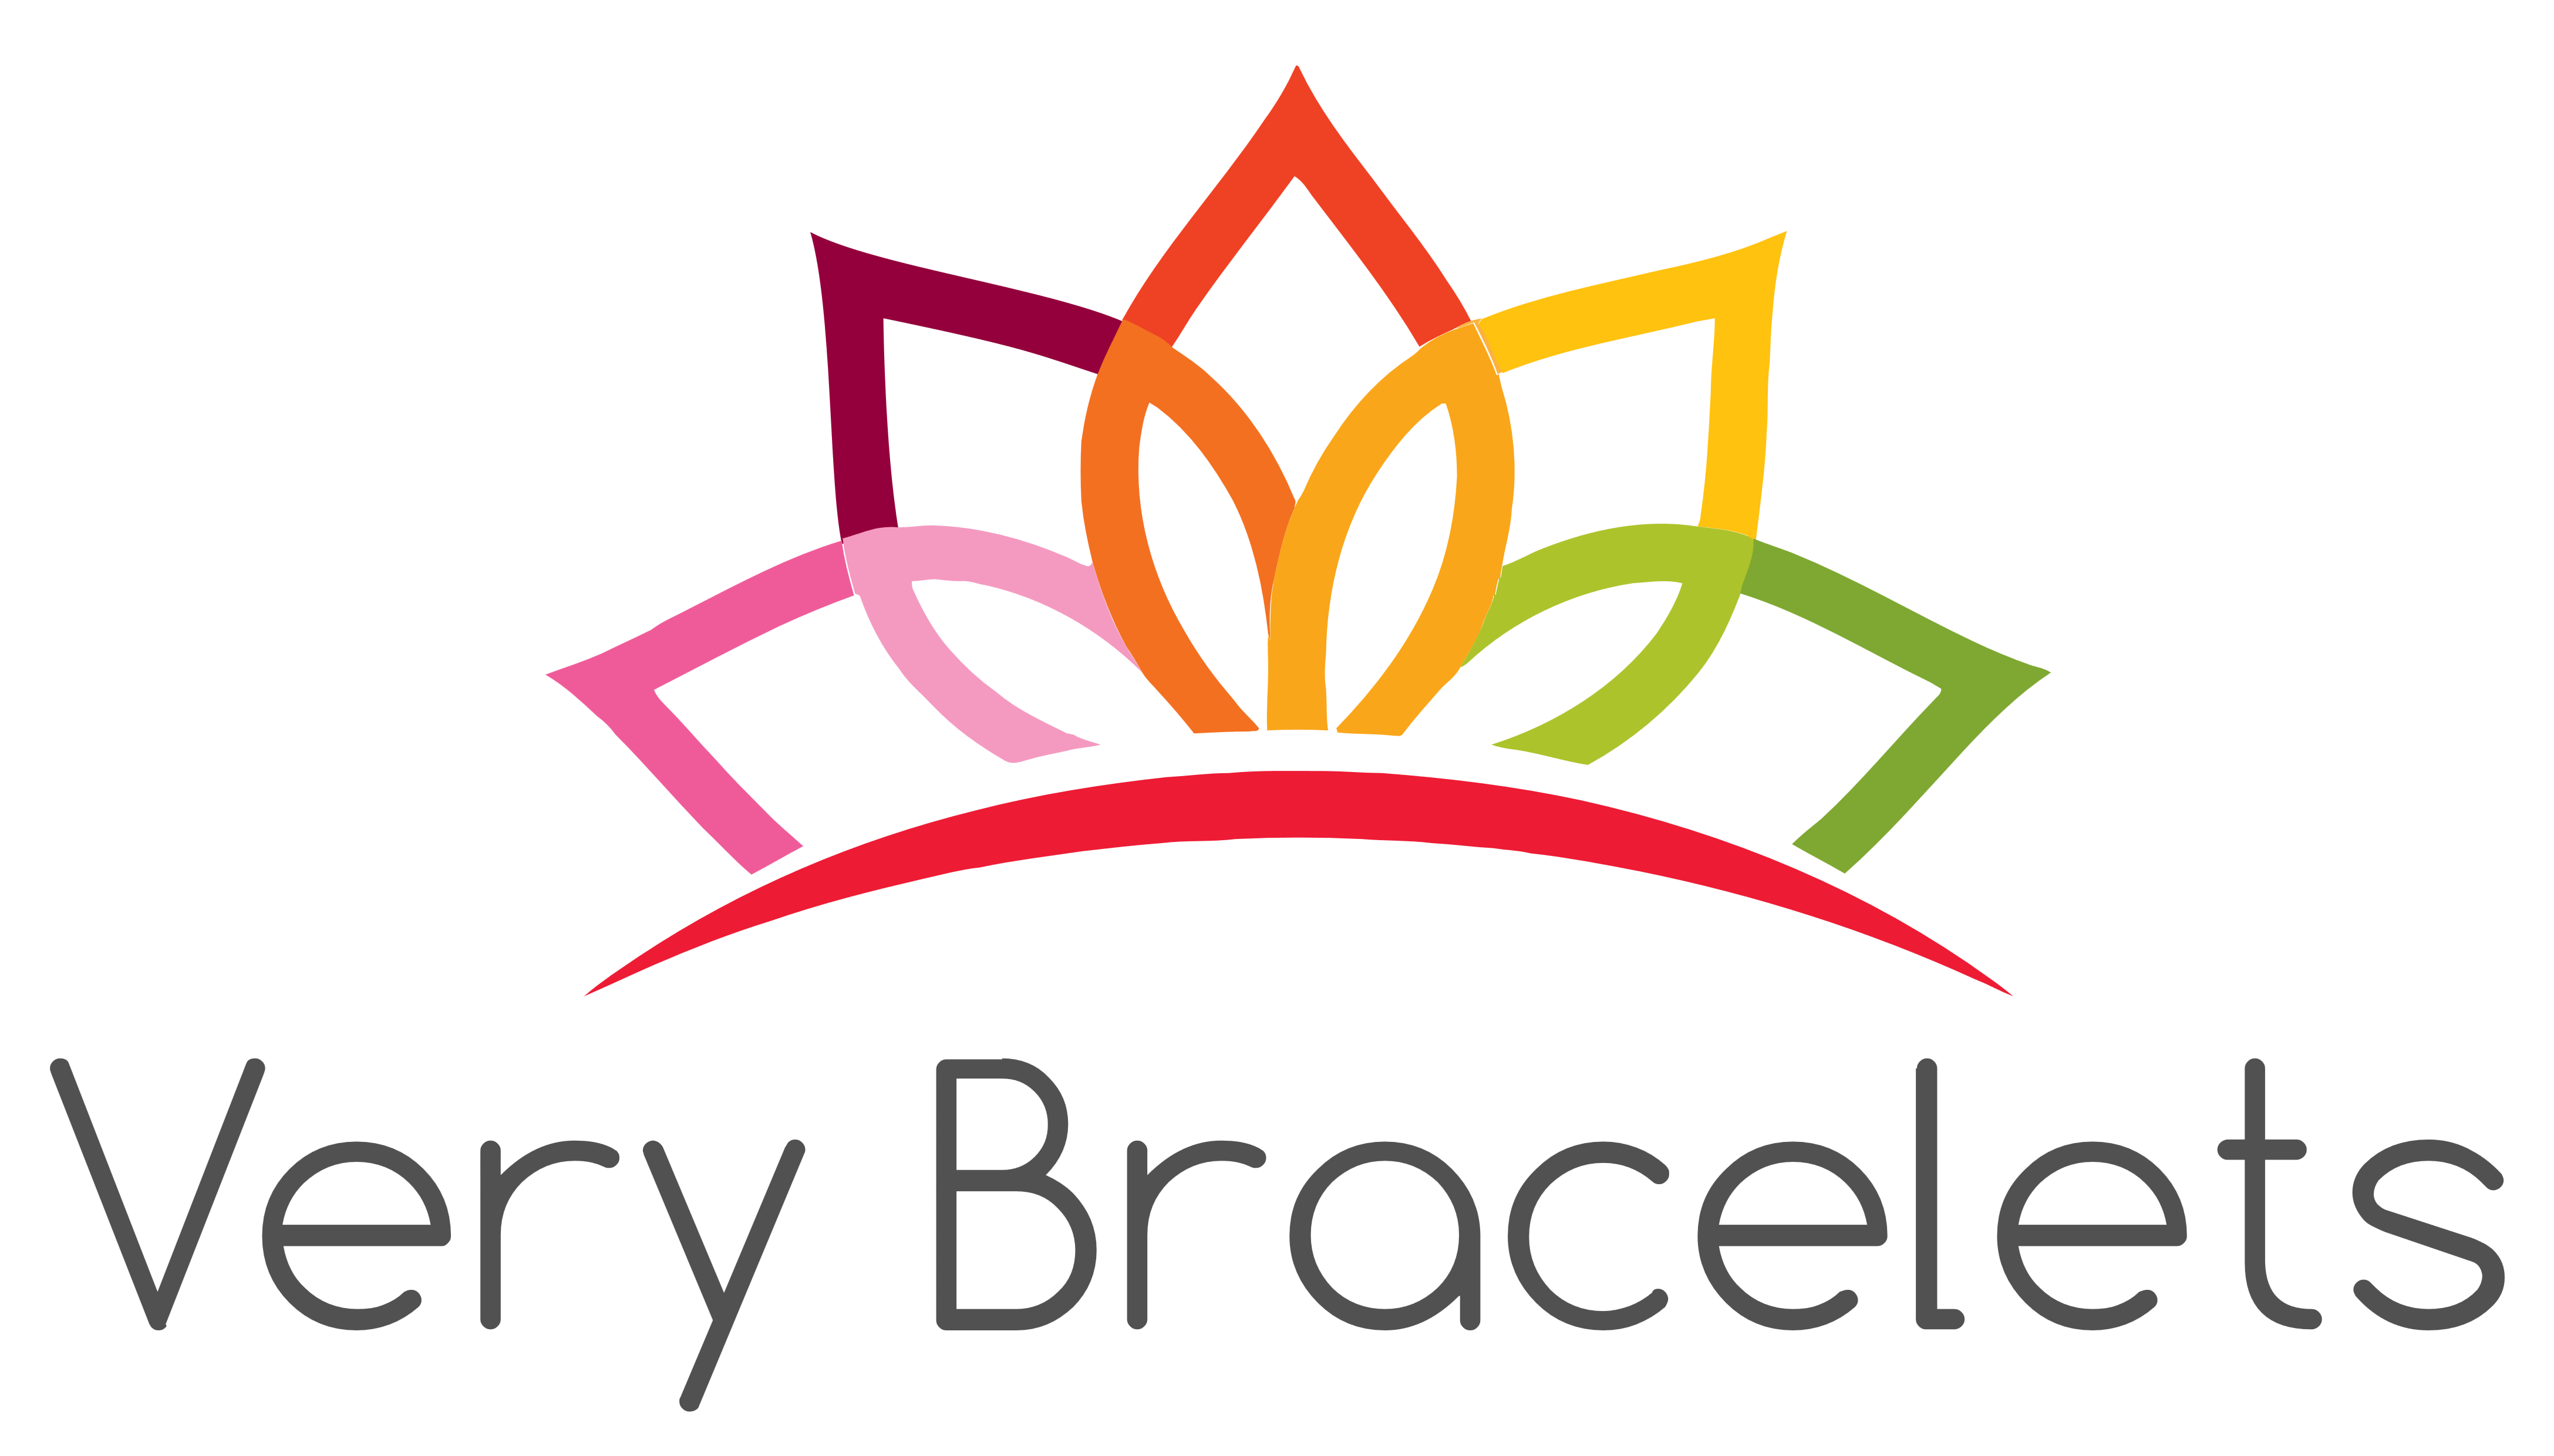 Bracelet Logo - Very Bracelets – Logos Download